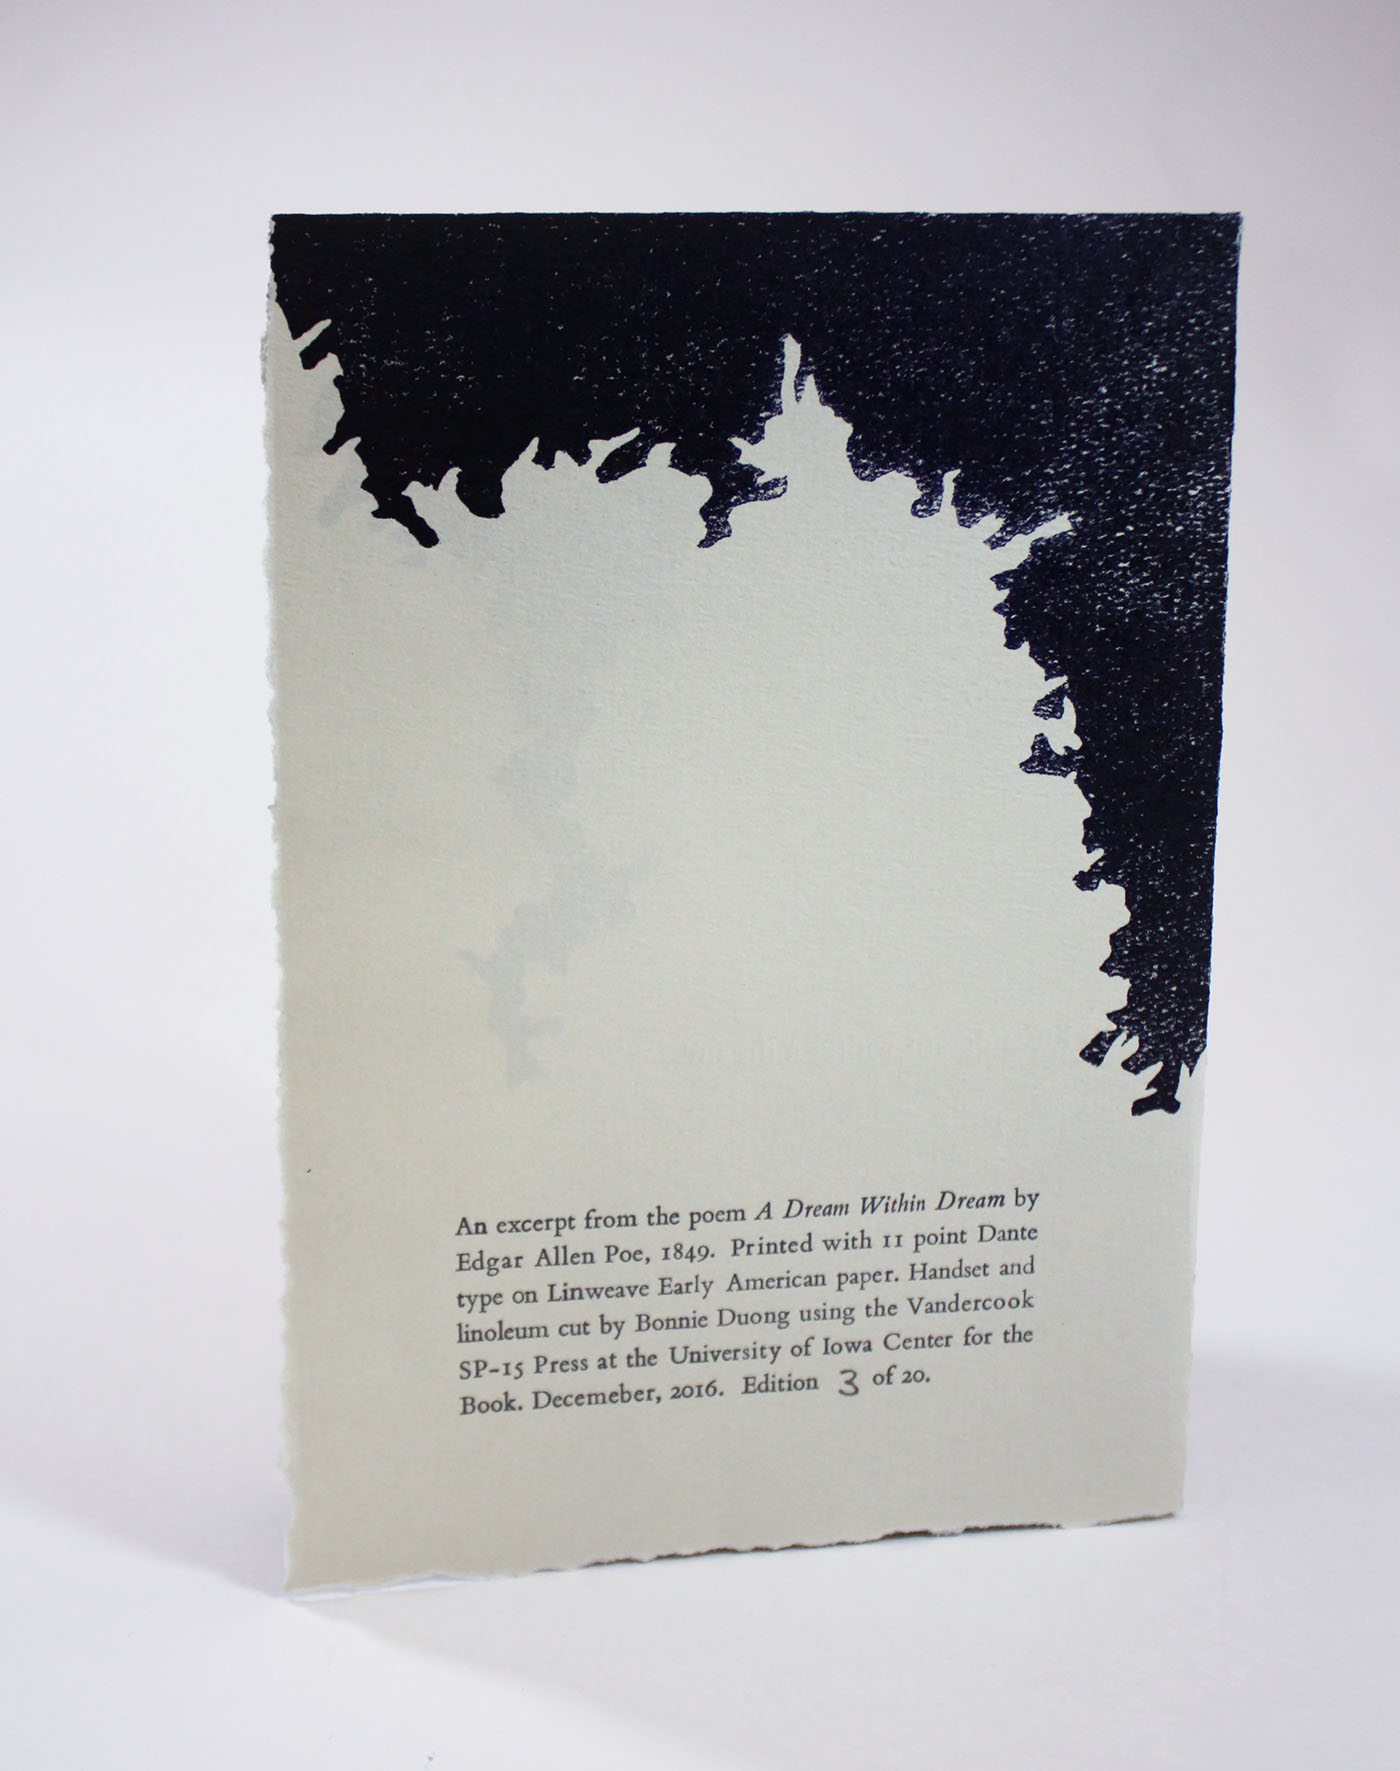 letterpress printmaking Book Arts tyopgraphy